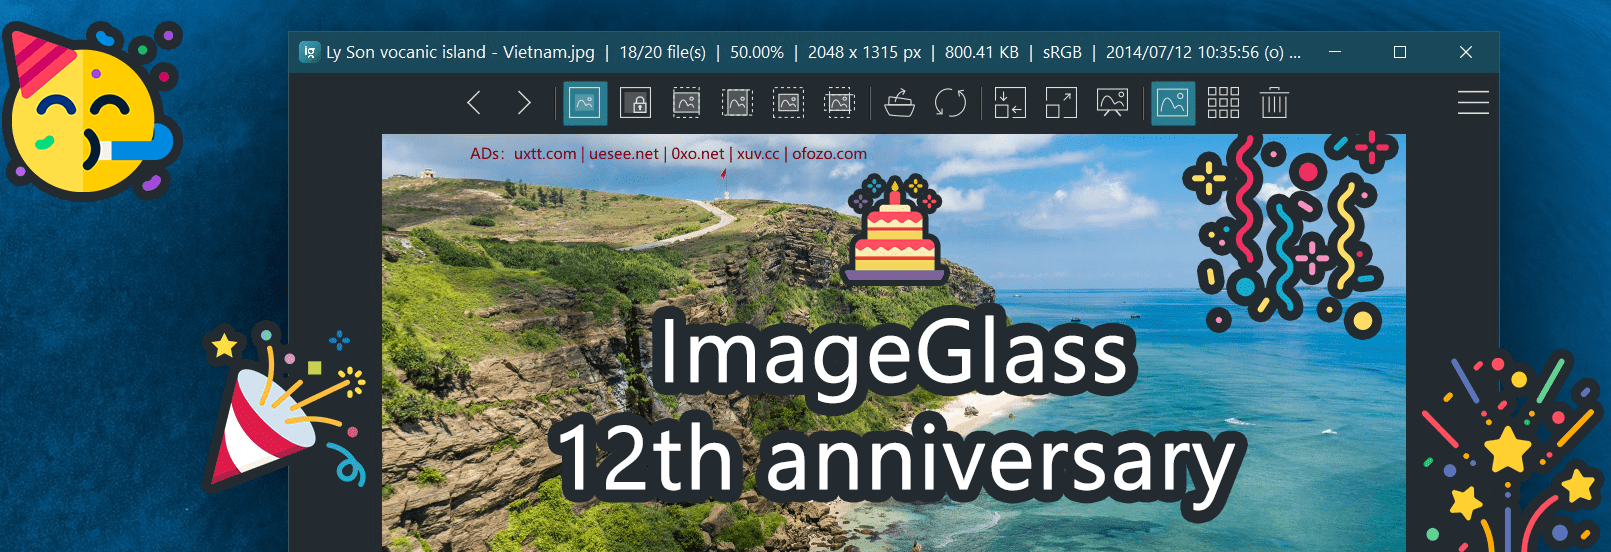 ImageGlass 轻量开源免费支持 HEIC 格式看图软件 - 第1张图片